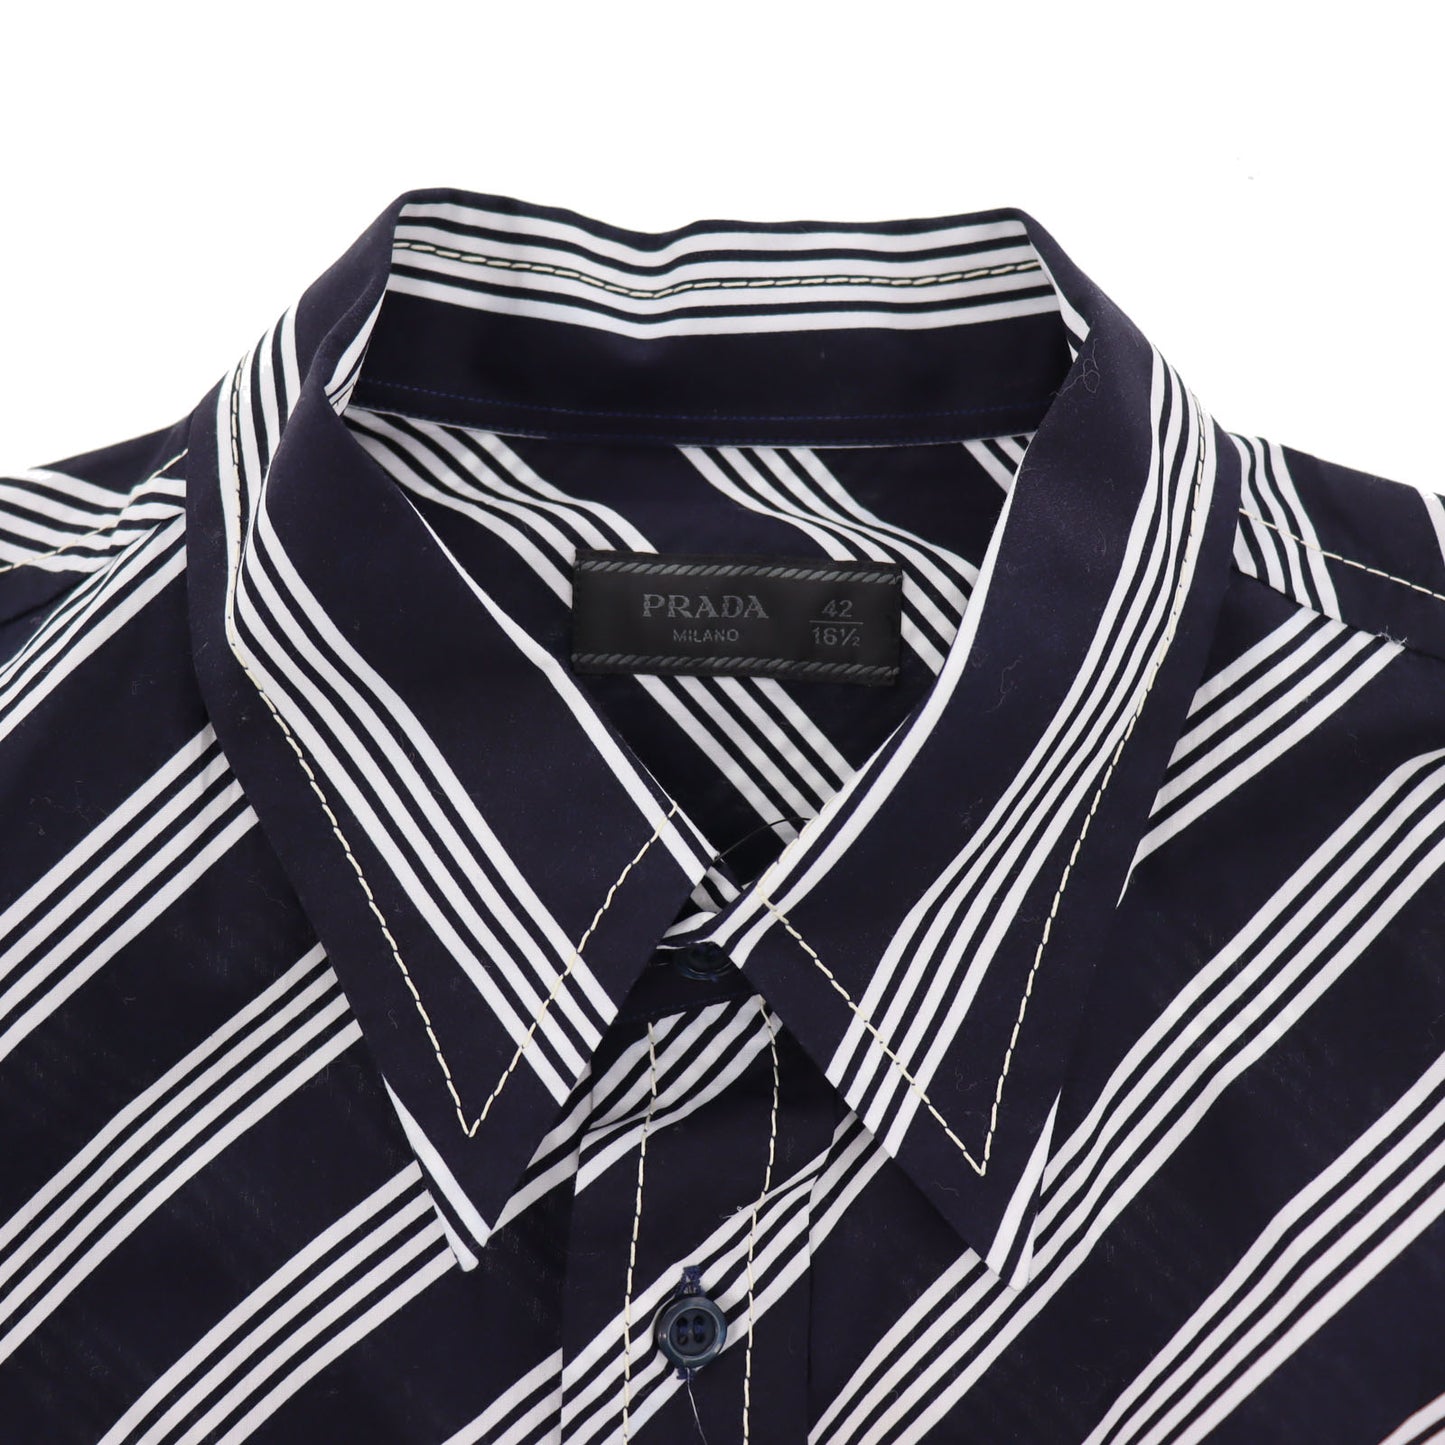 PRADA Logos Tops Shirt Light Navy White 100% Cotton Size 42 #AG994